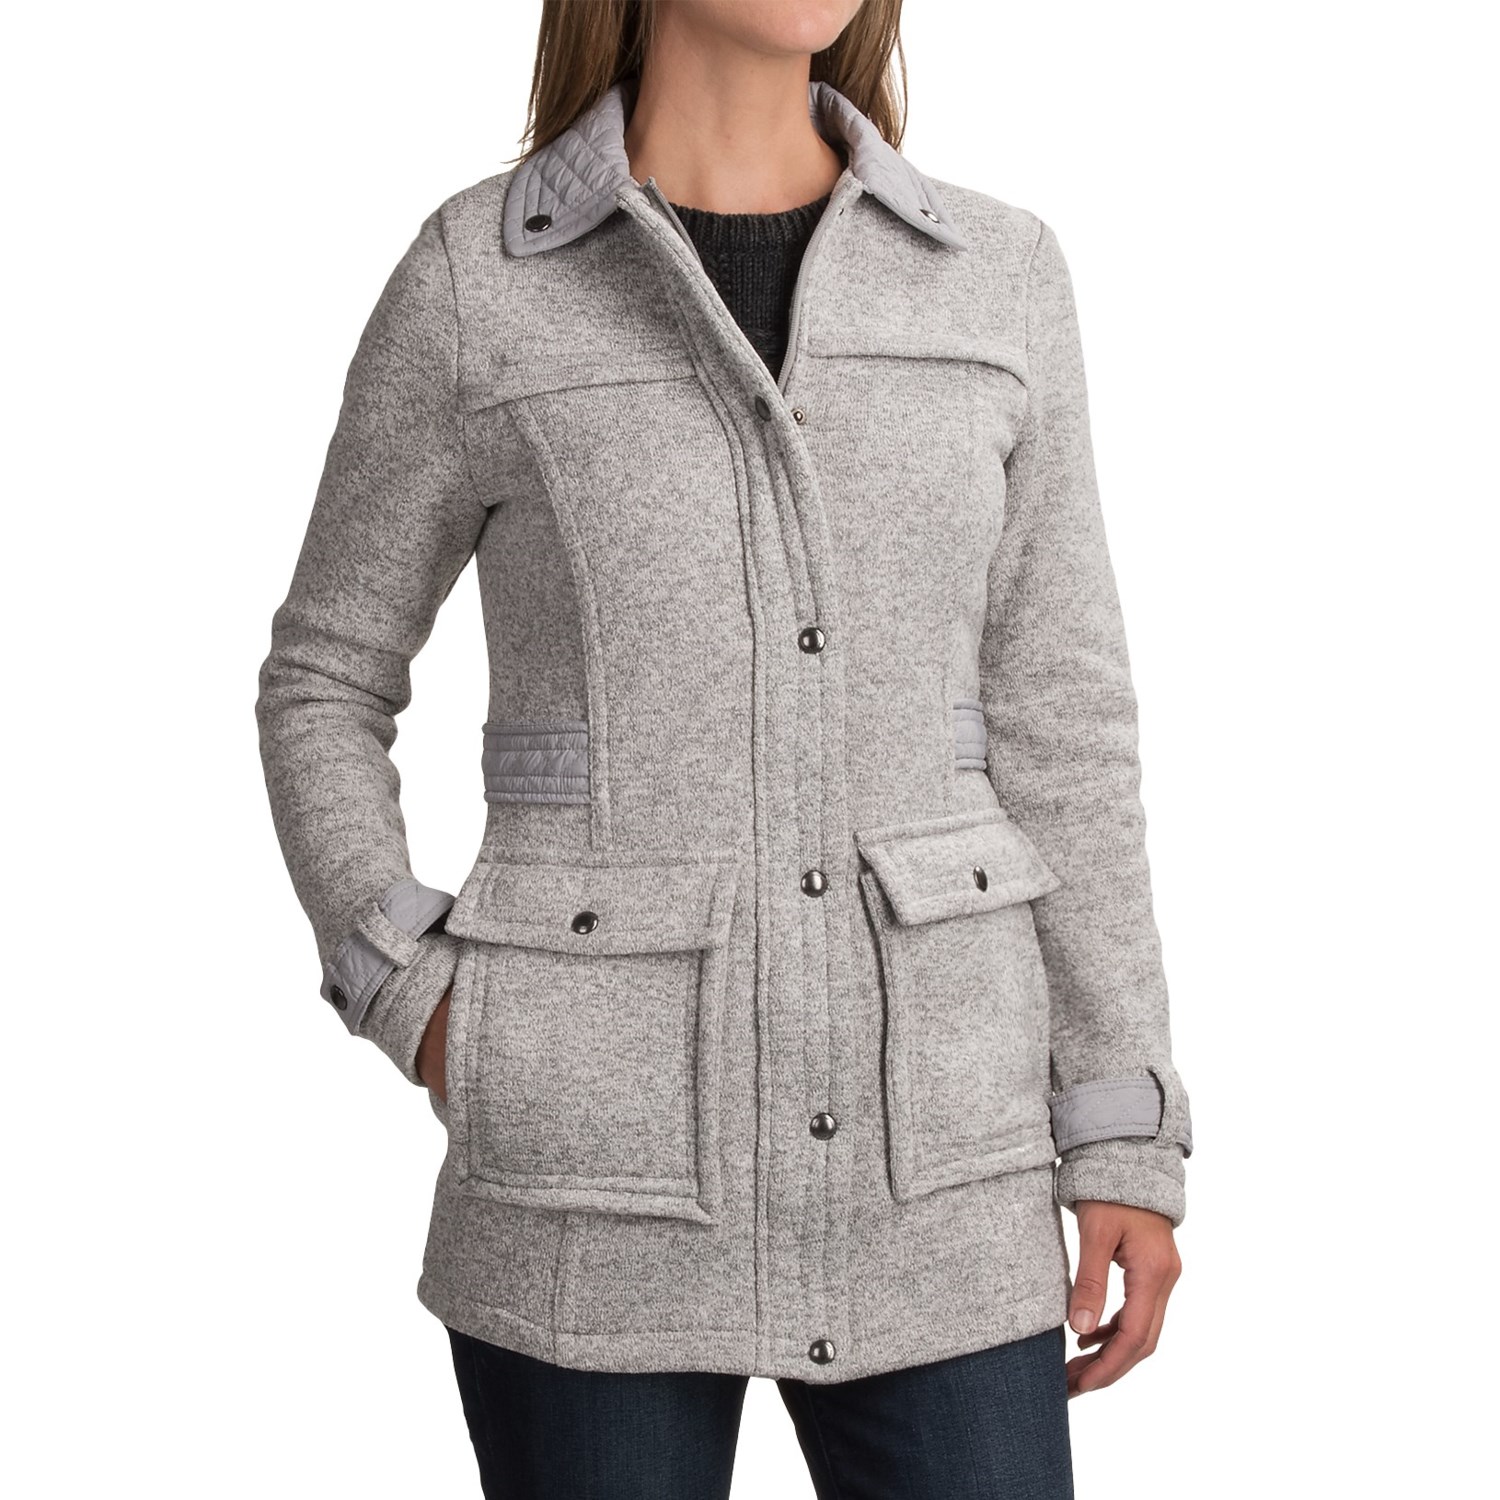 Weatherproof Full-Length Sweater Jacket (For Women) - Save 61%